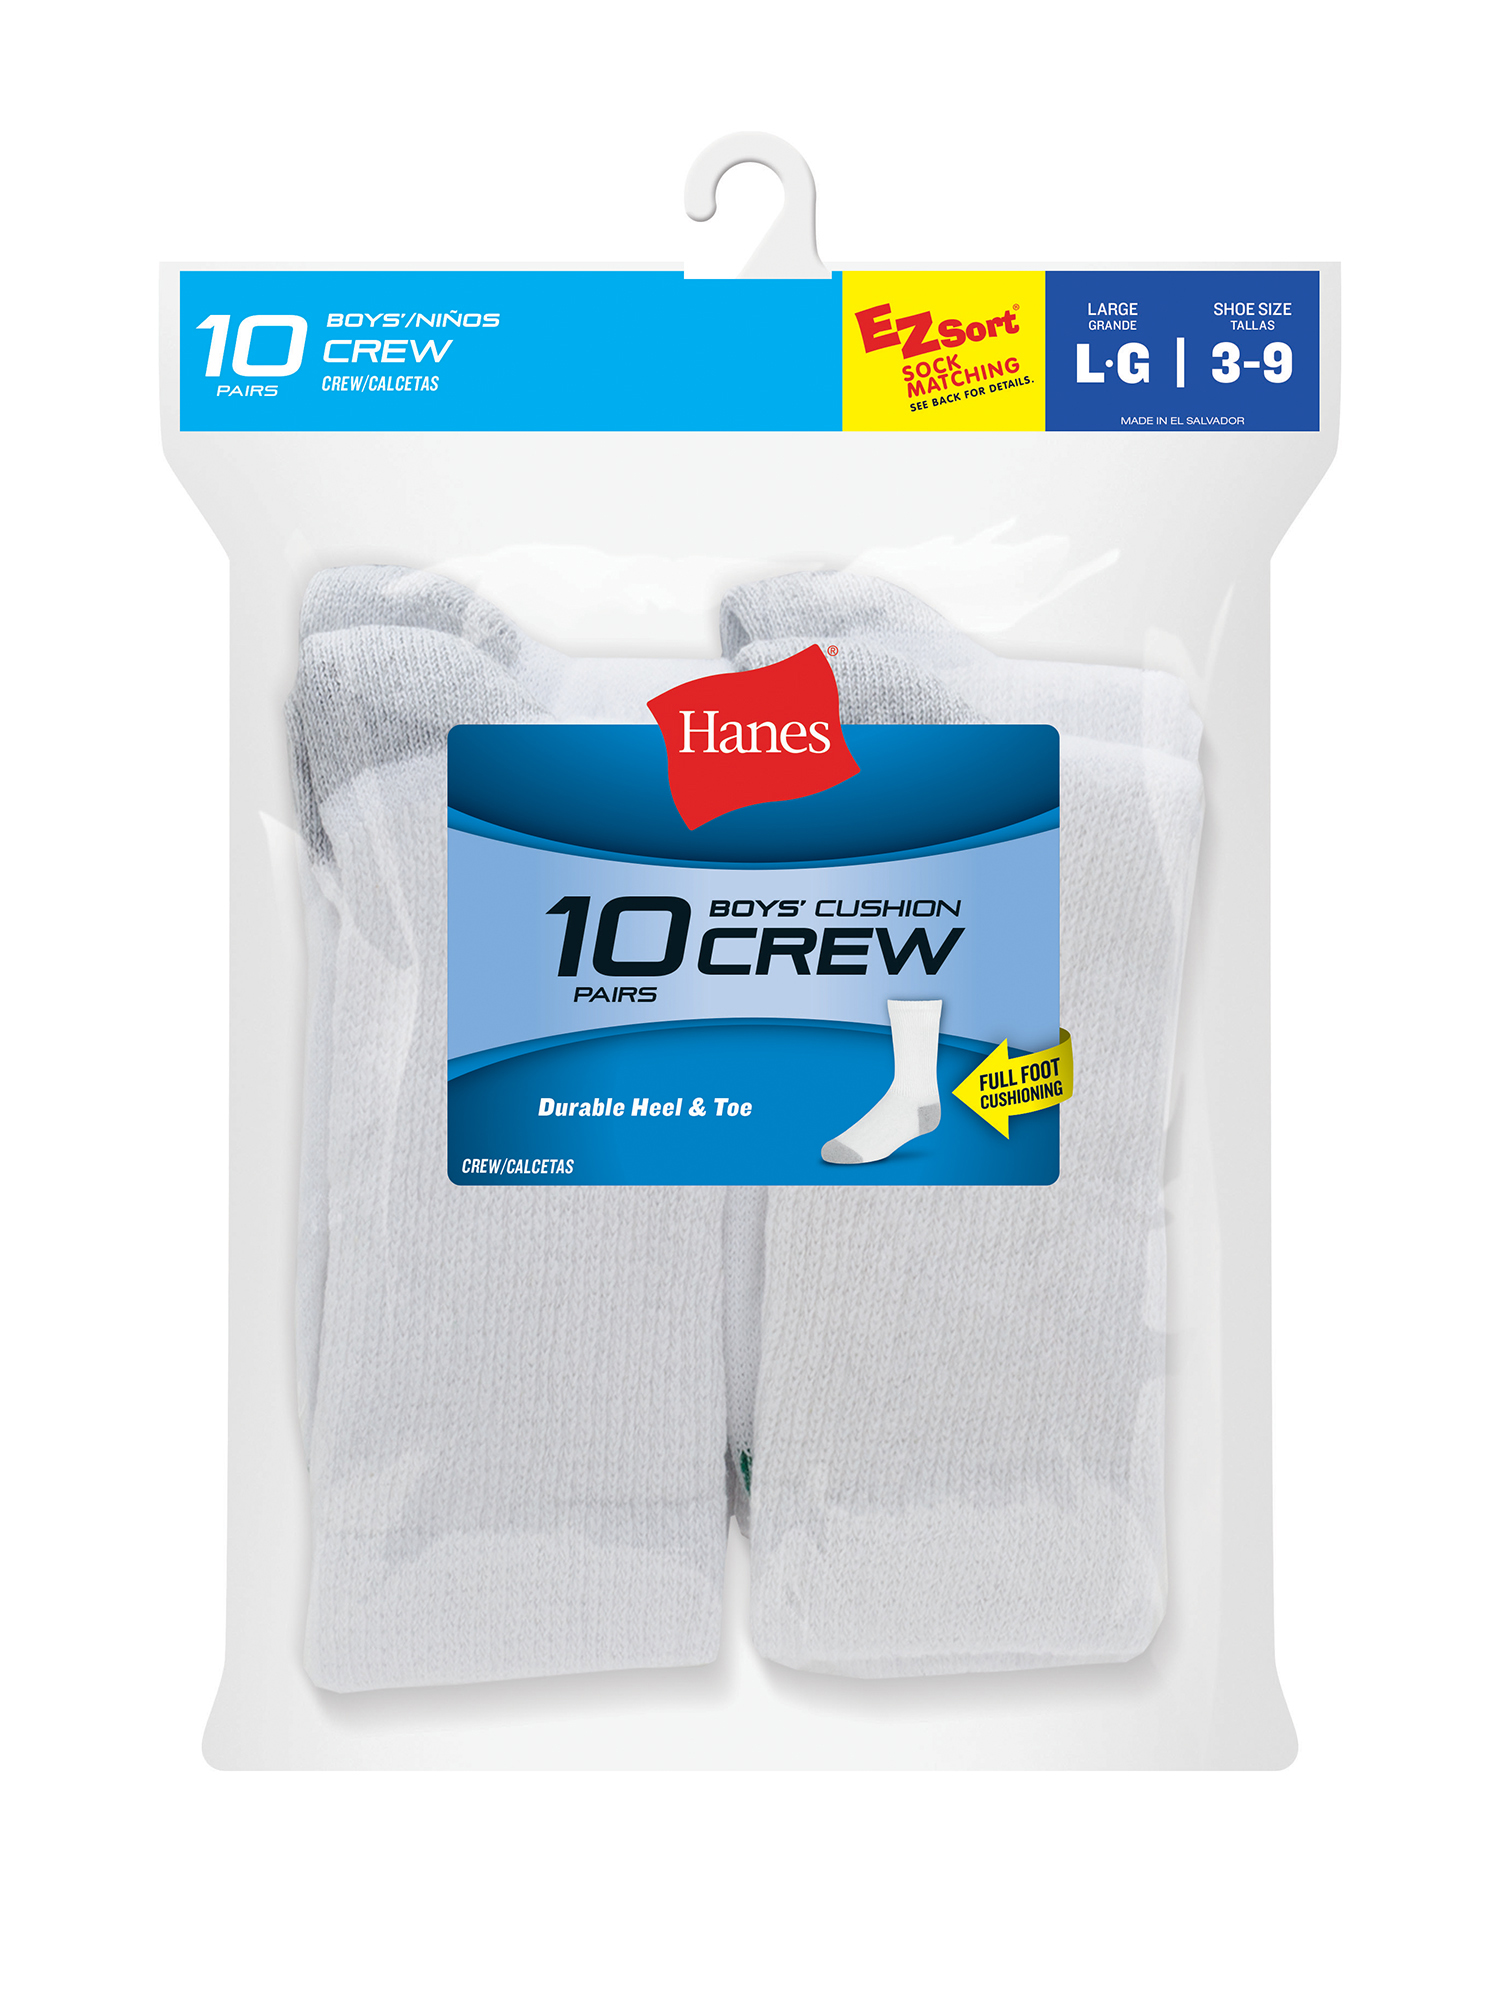 Hanes Boys Crew Socks, 10 Pack - Walmart.com